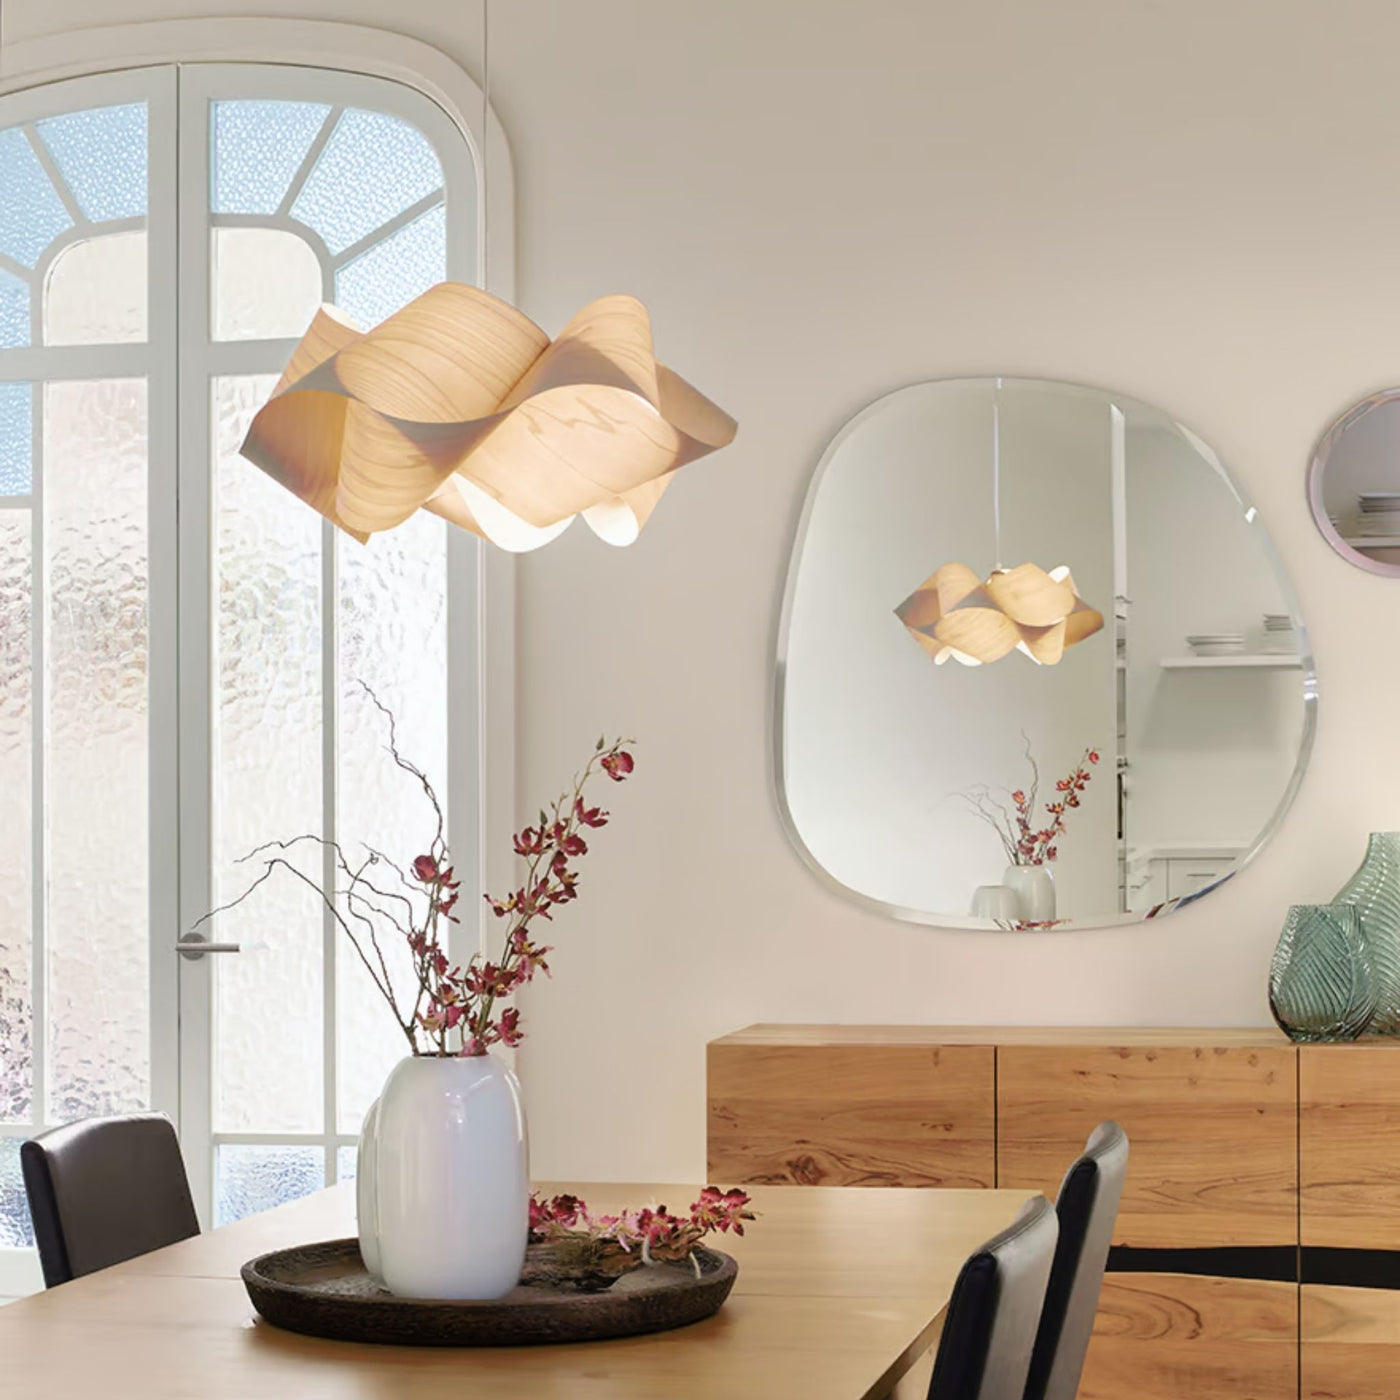 LZF Swirl Pendant Light in Cozy Valencia Dining Room with Mirror